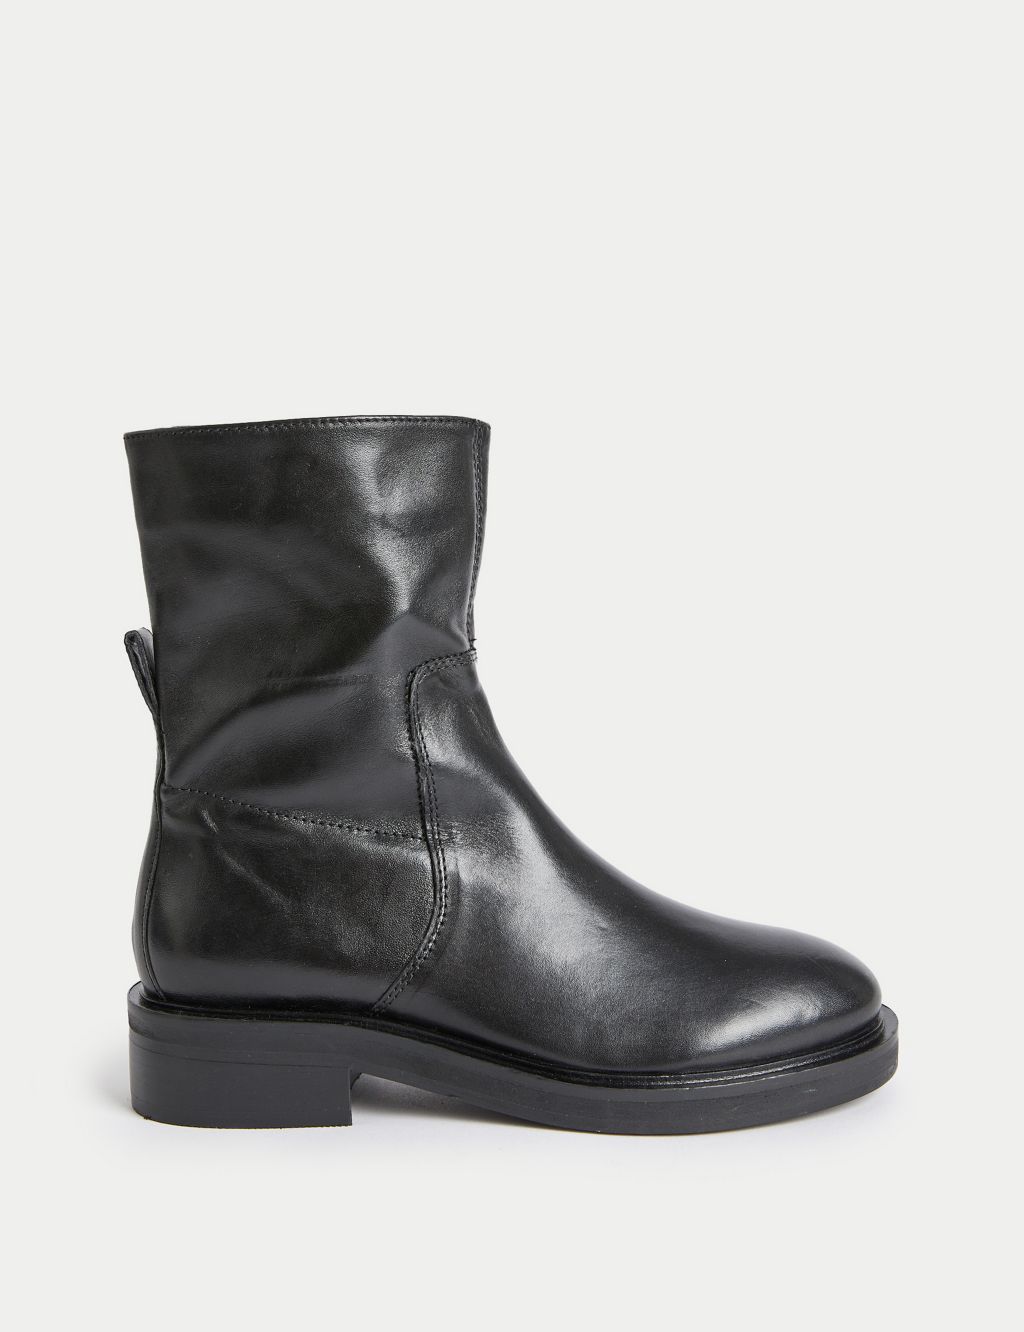 Leather Flatform Round Toe Ankle Boots image 2